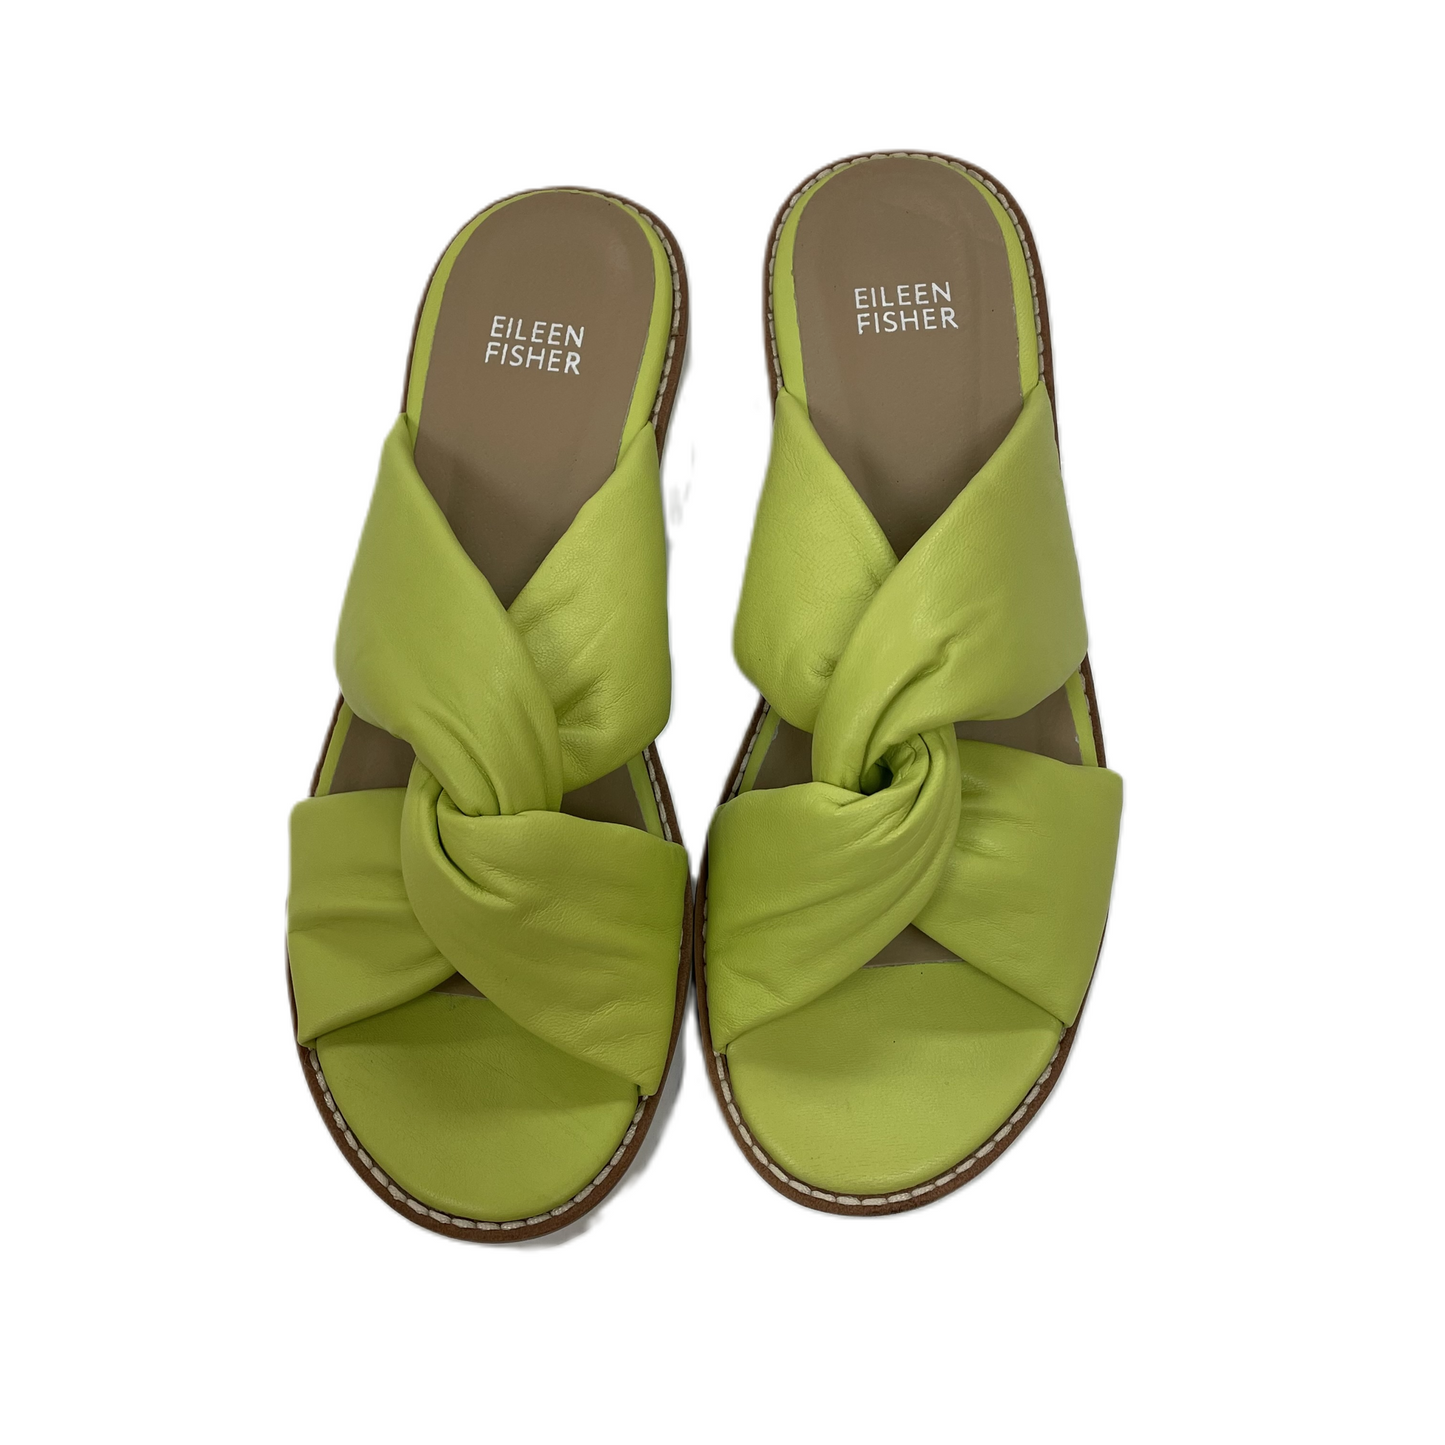 Yellow Sandals Heels Platform By Eileen Fisher, Size: 7.5